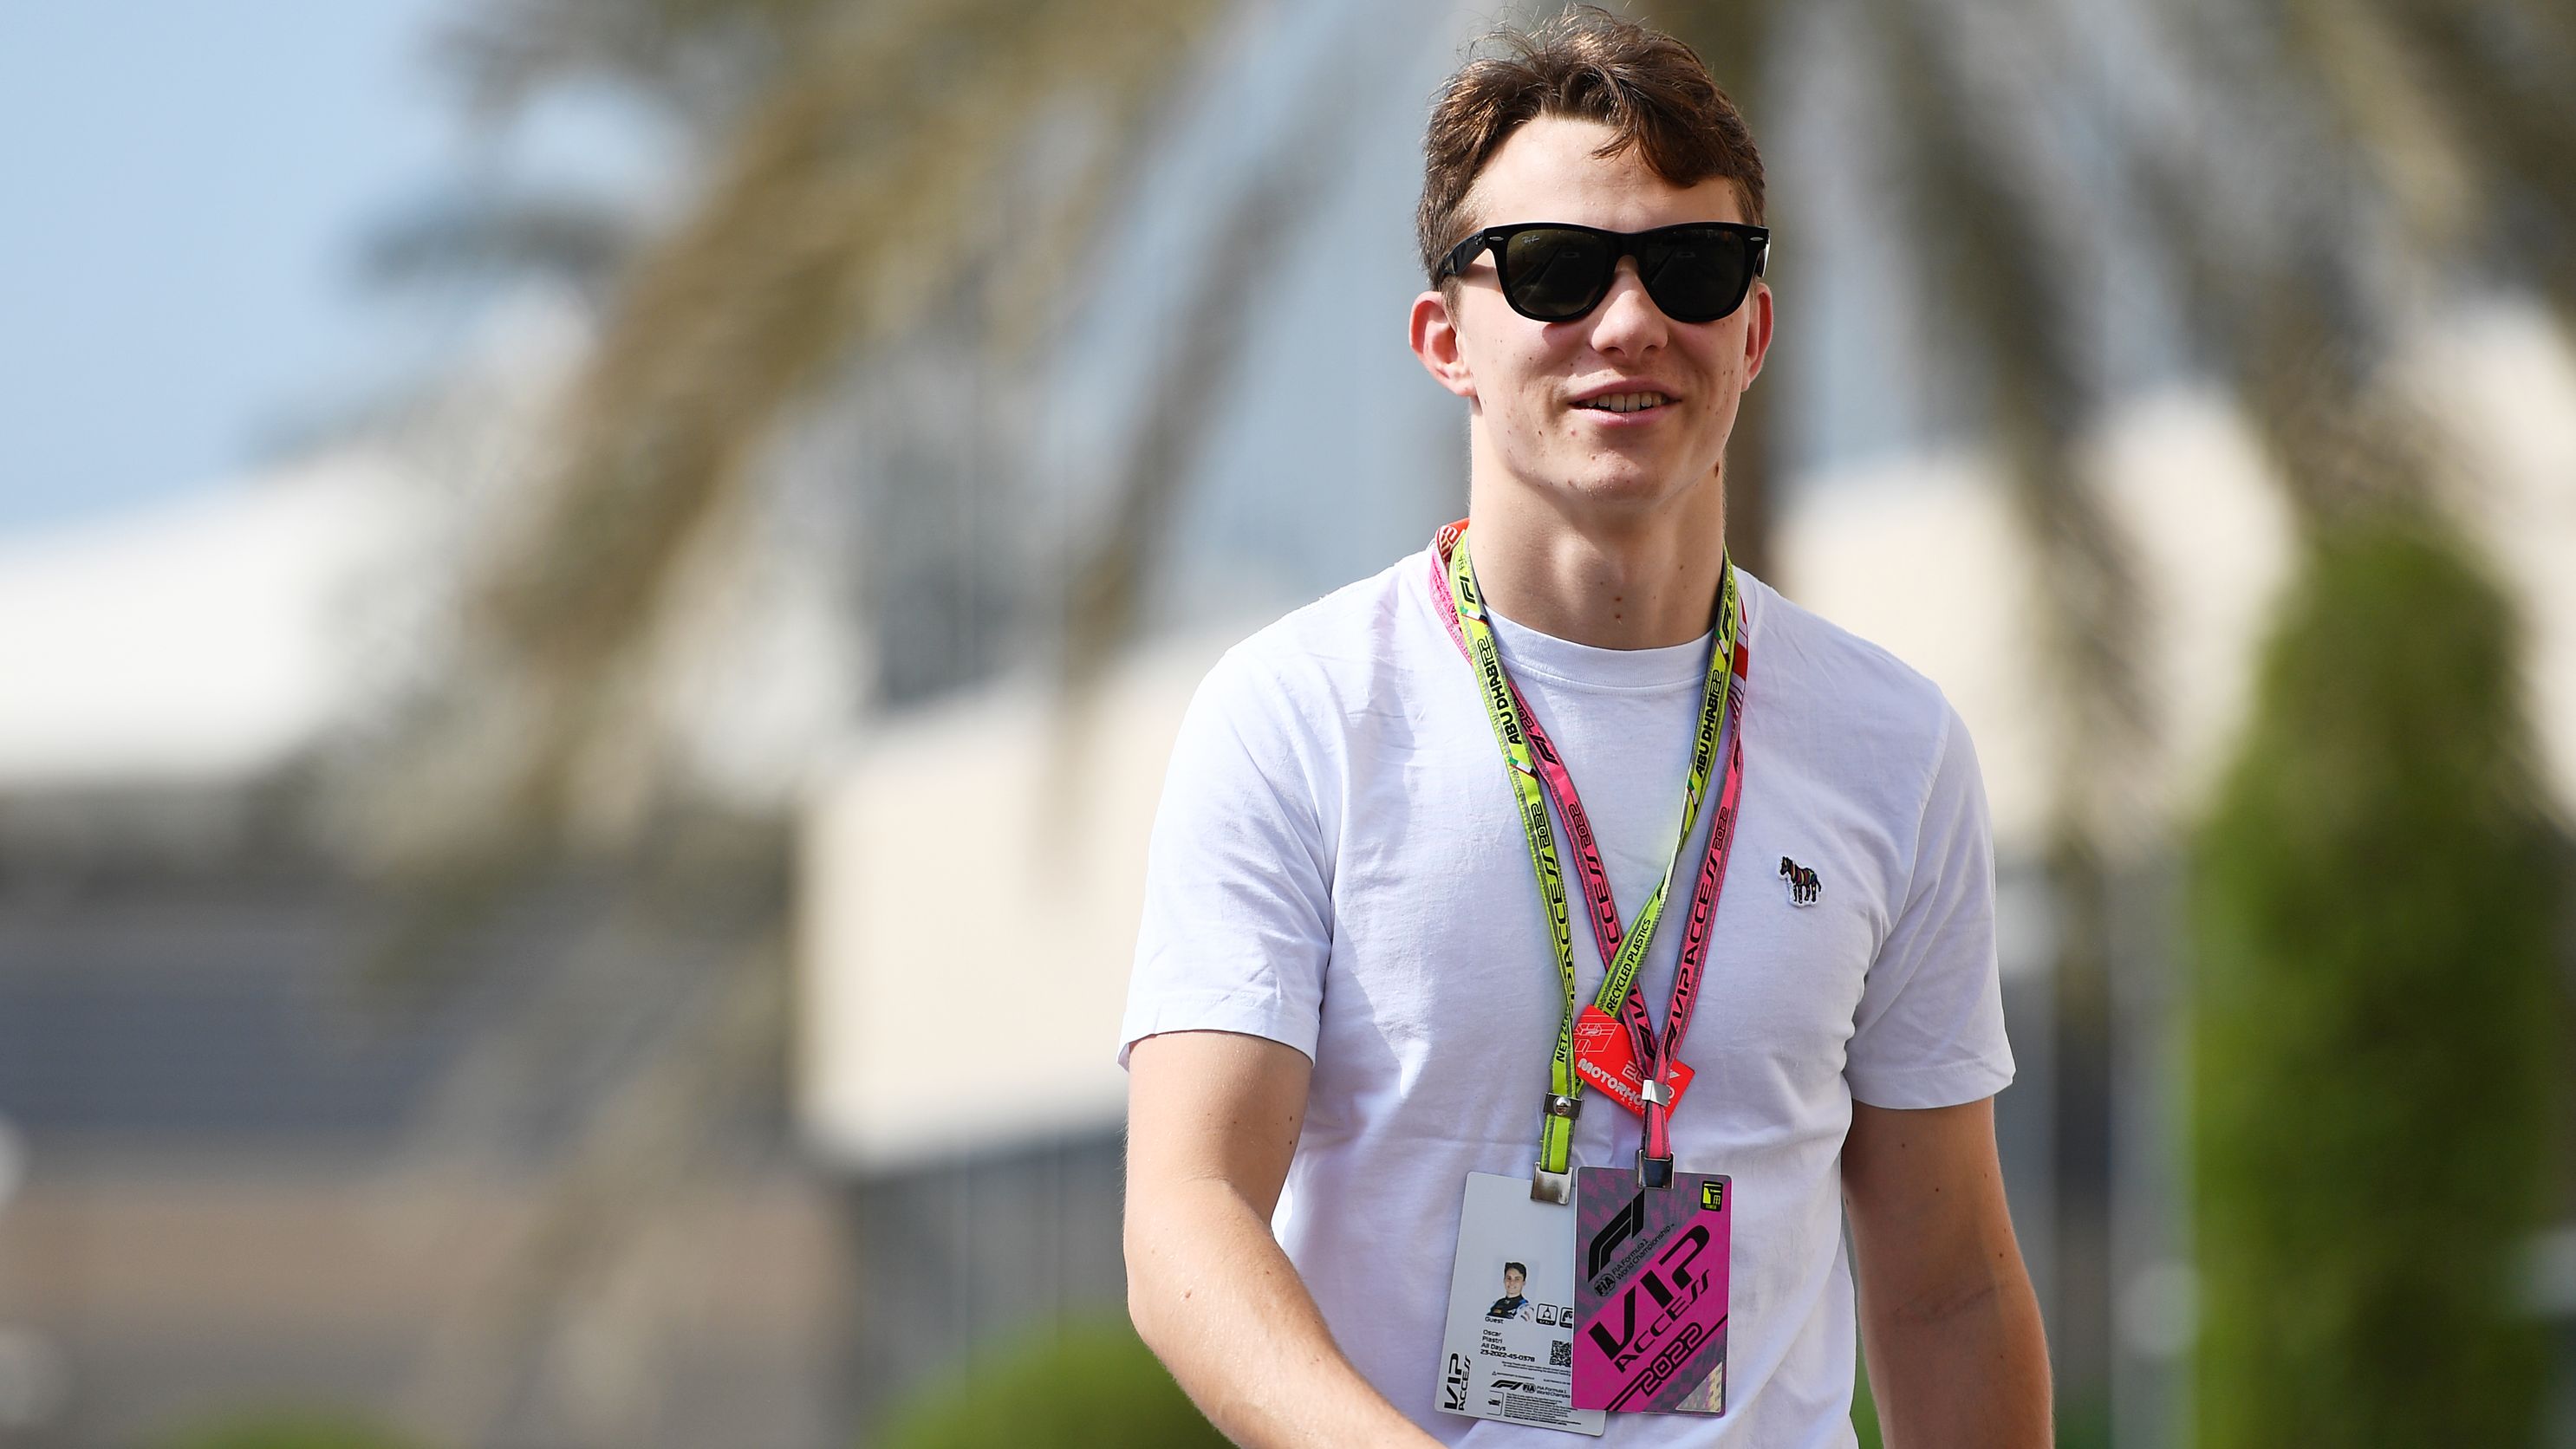 Oscar Piastri walks into the F1 paddock prior to the F1 Grand Prix of Abu Dhabi.